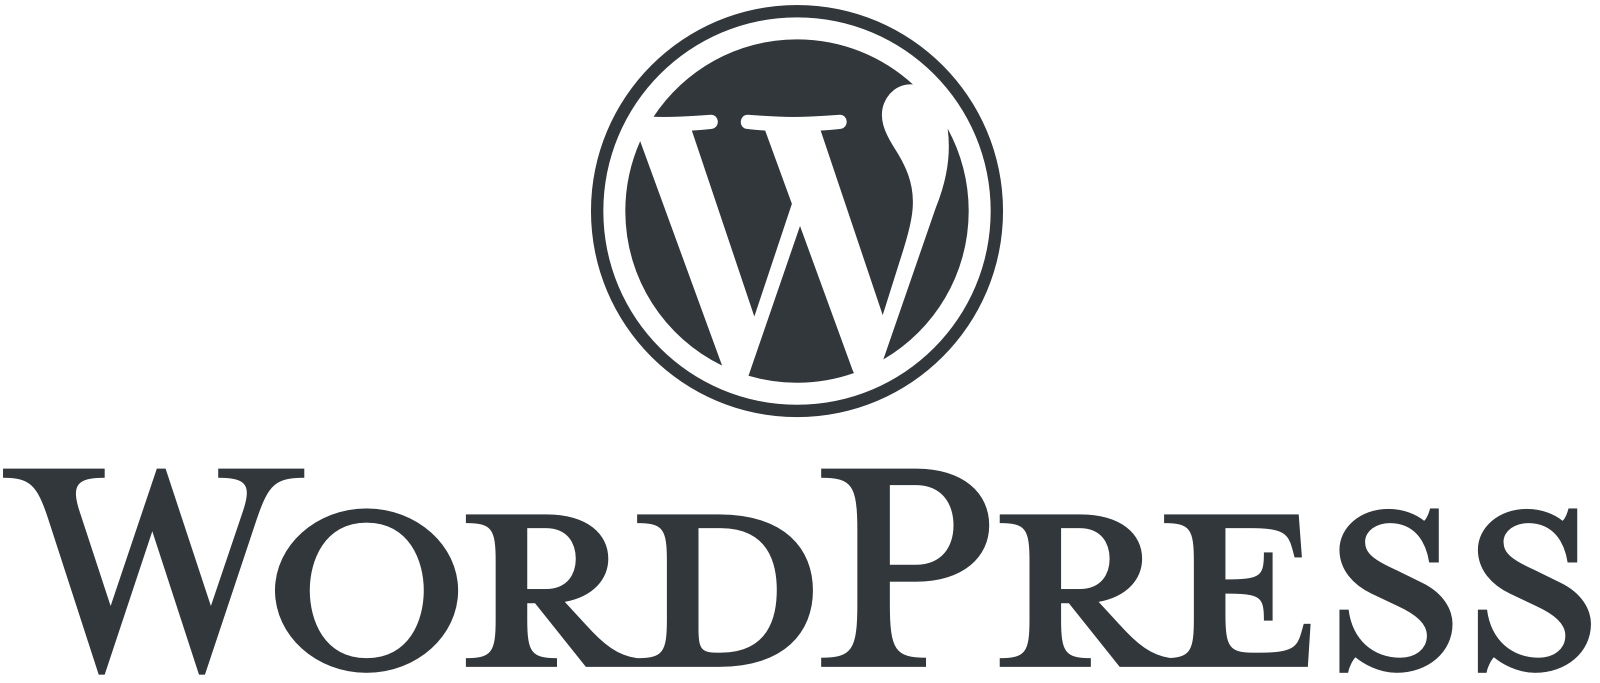 Wordpress Complete logo